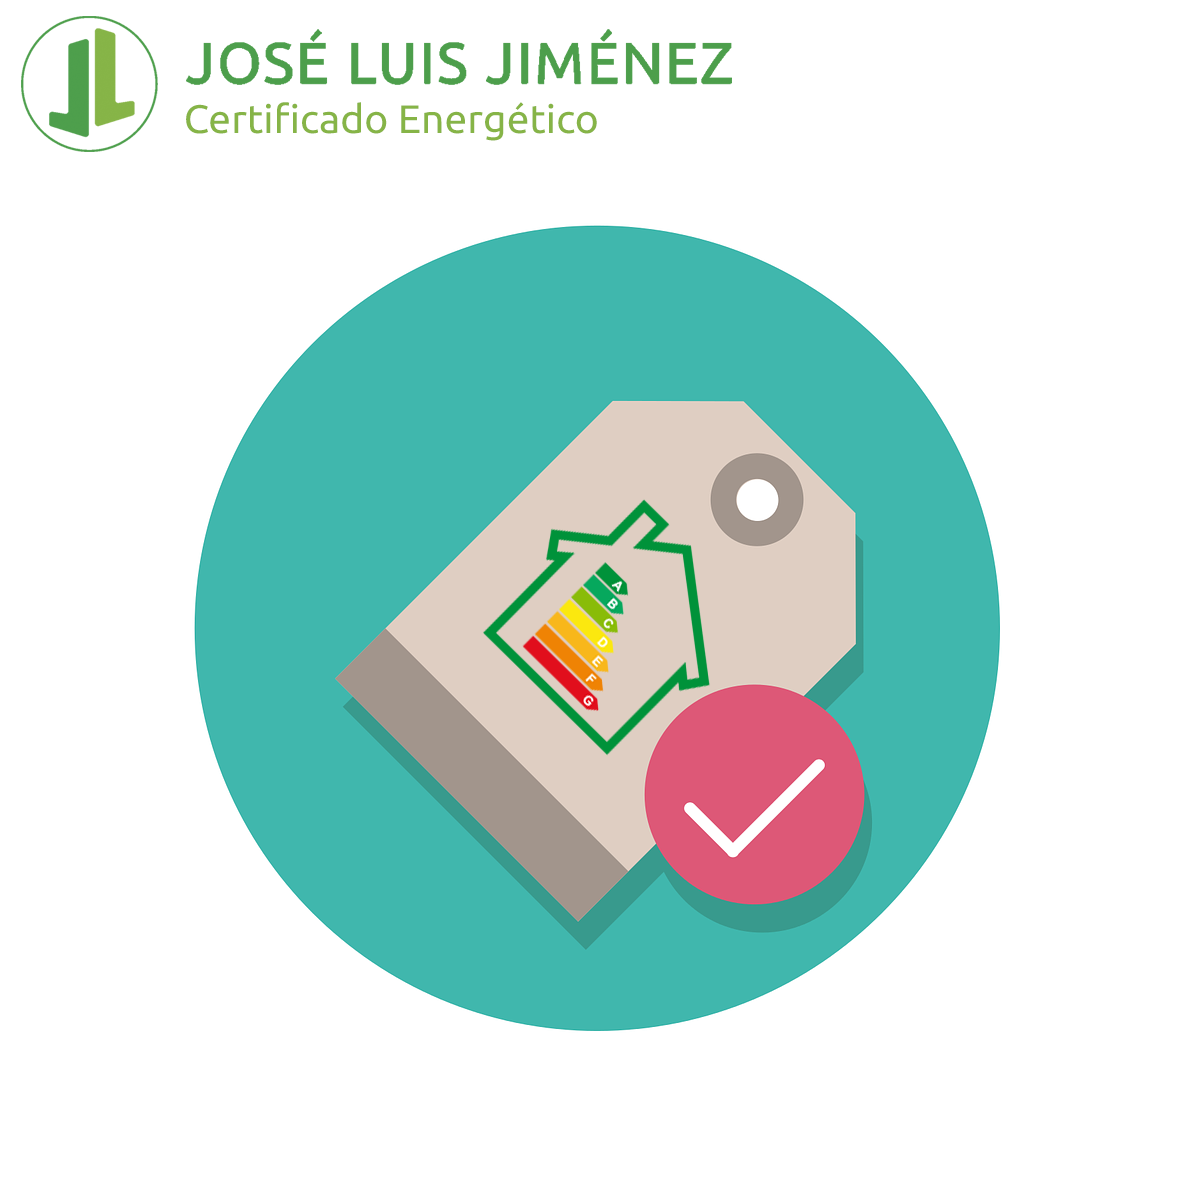 José Luis Jiménez. Certificado Energético